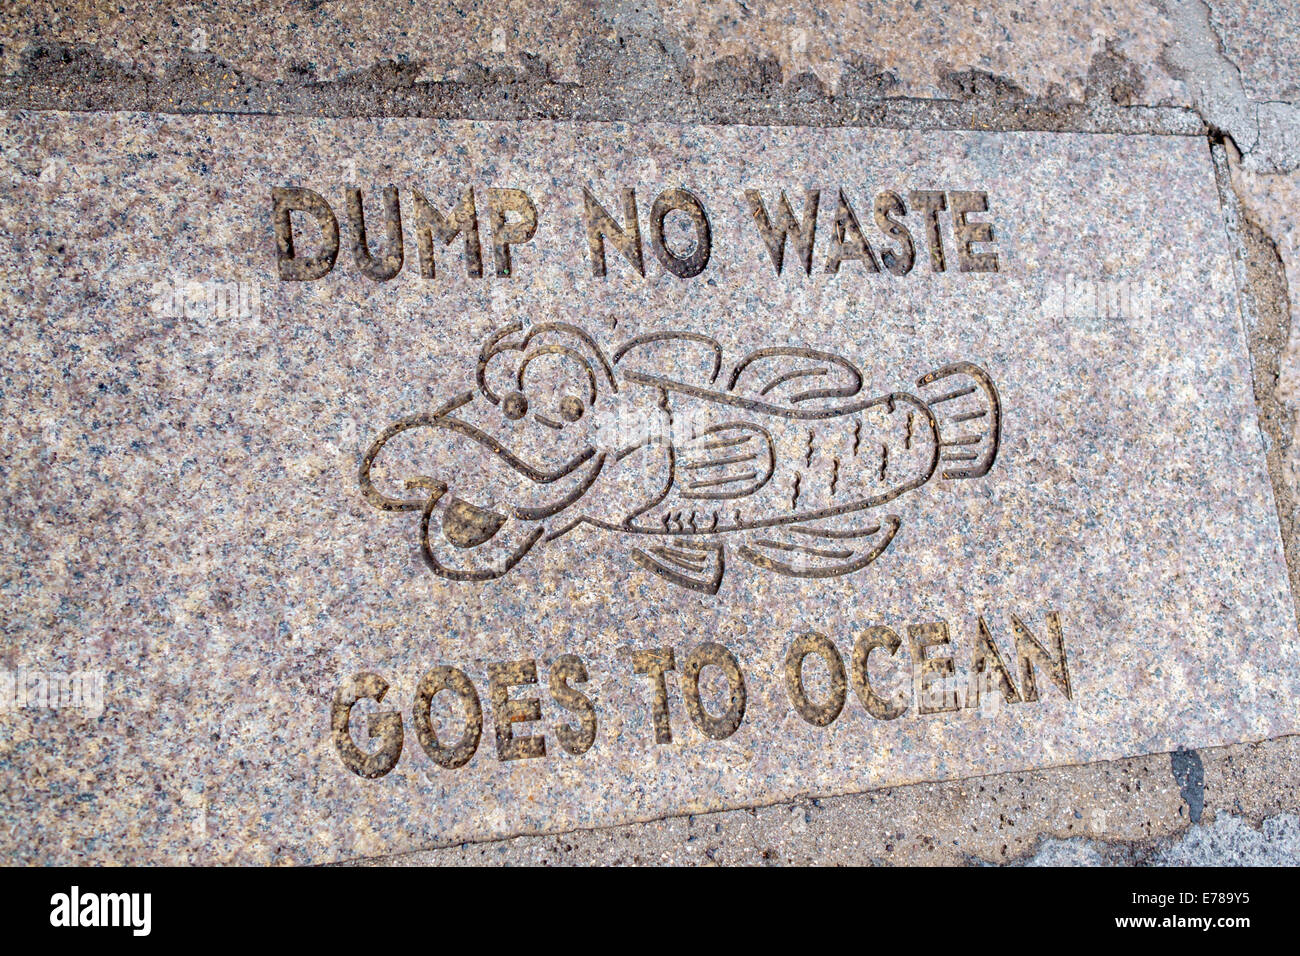 Hawaii,Hawaiian,Oahu,Honolulu,Chinatown,dump no waste goes to ocean,gutter,sign,warning,pollution,preventing,USA,US,United,States,America Polynesia,HI Stock Photo